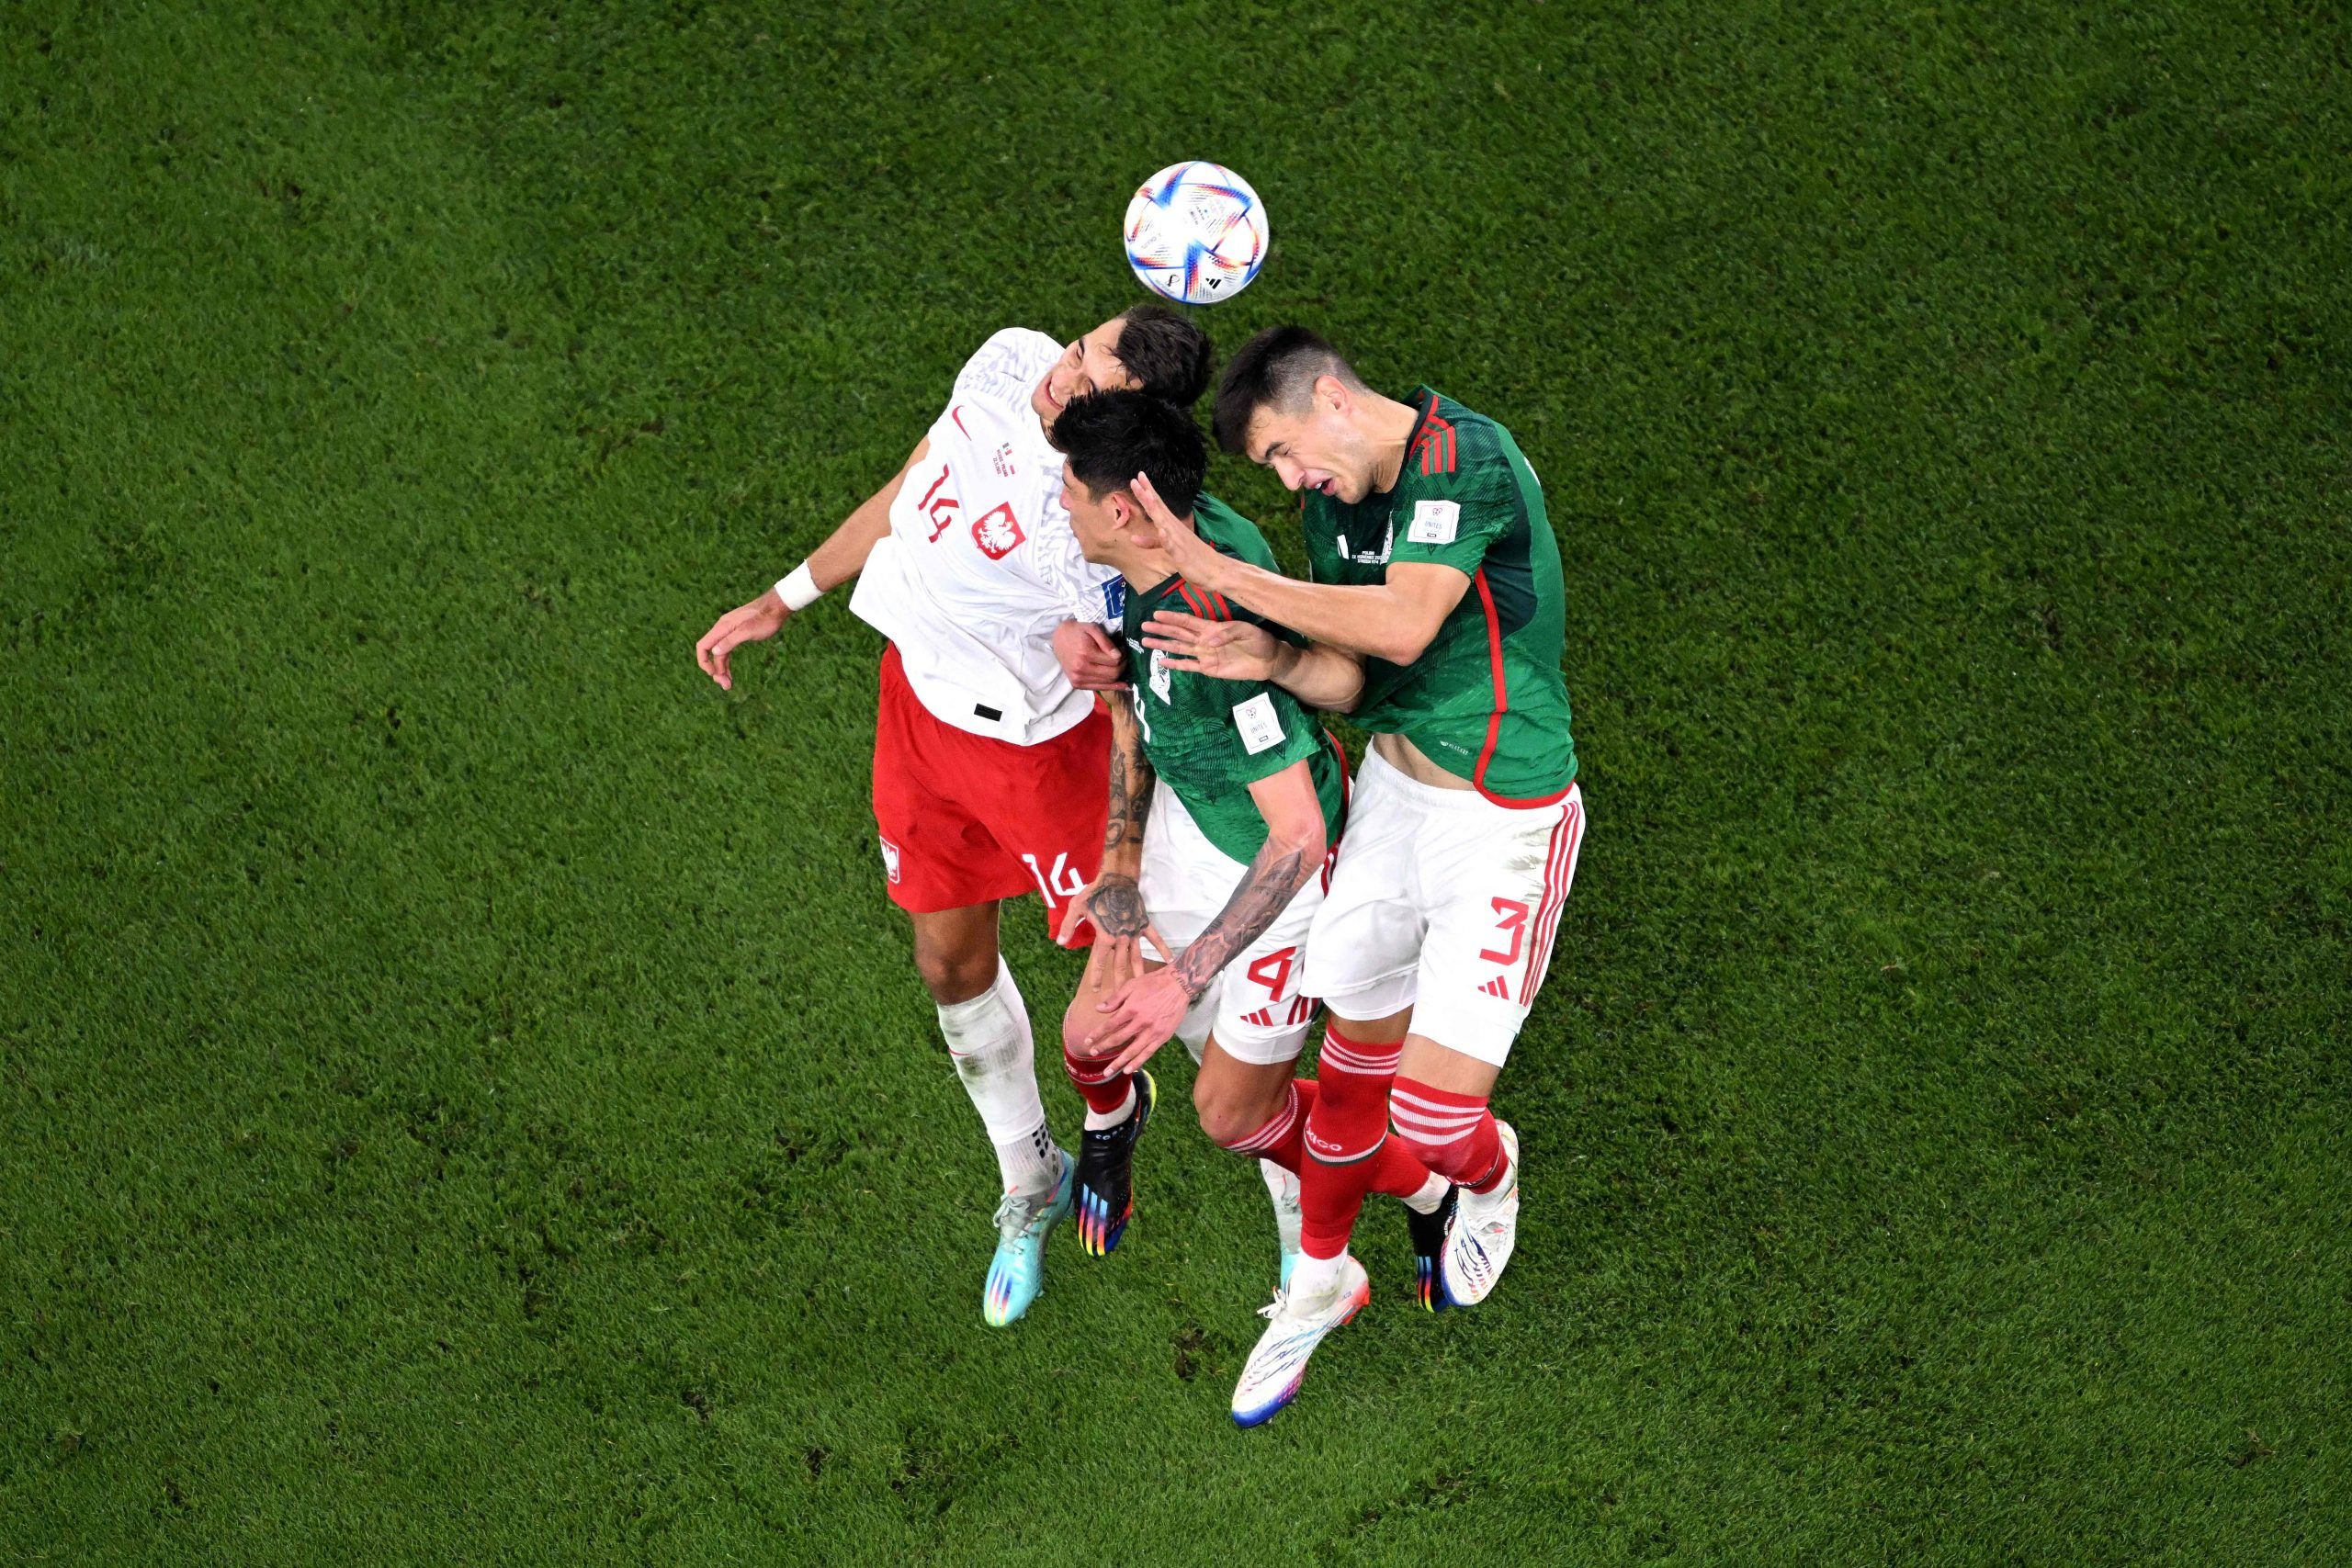 Mexico 0-0 Poland: Robert Lewandowski has penalty saved in World